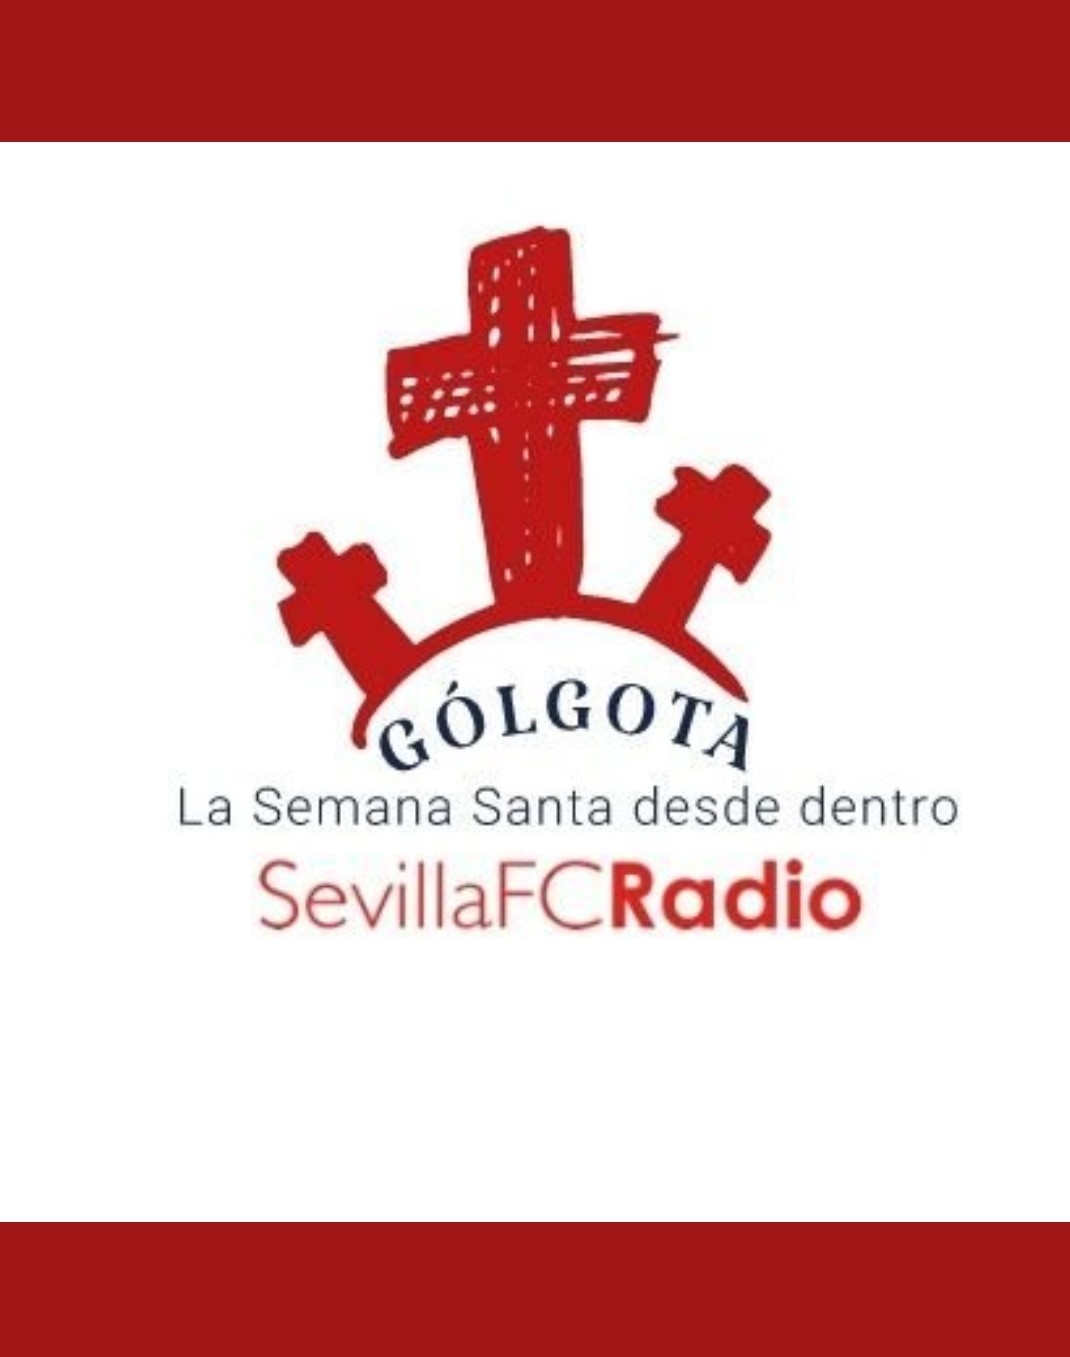 Logo Golgota